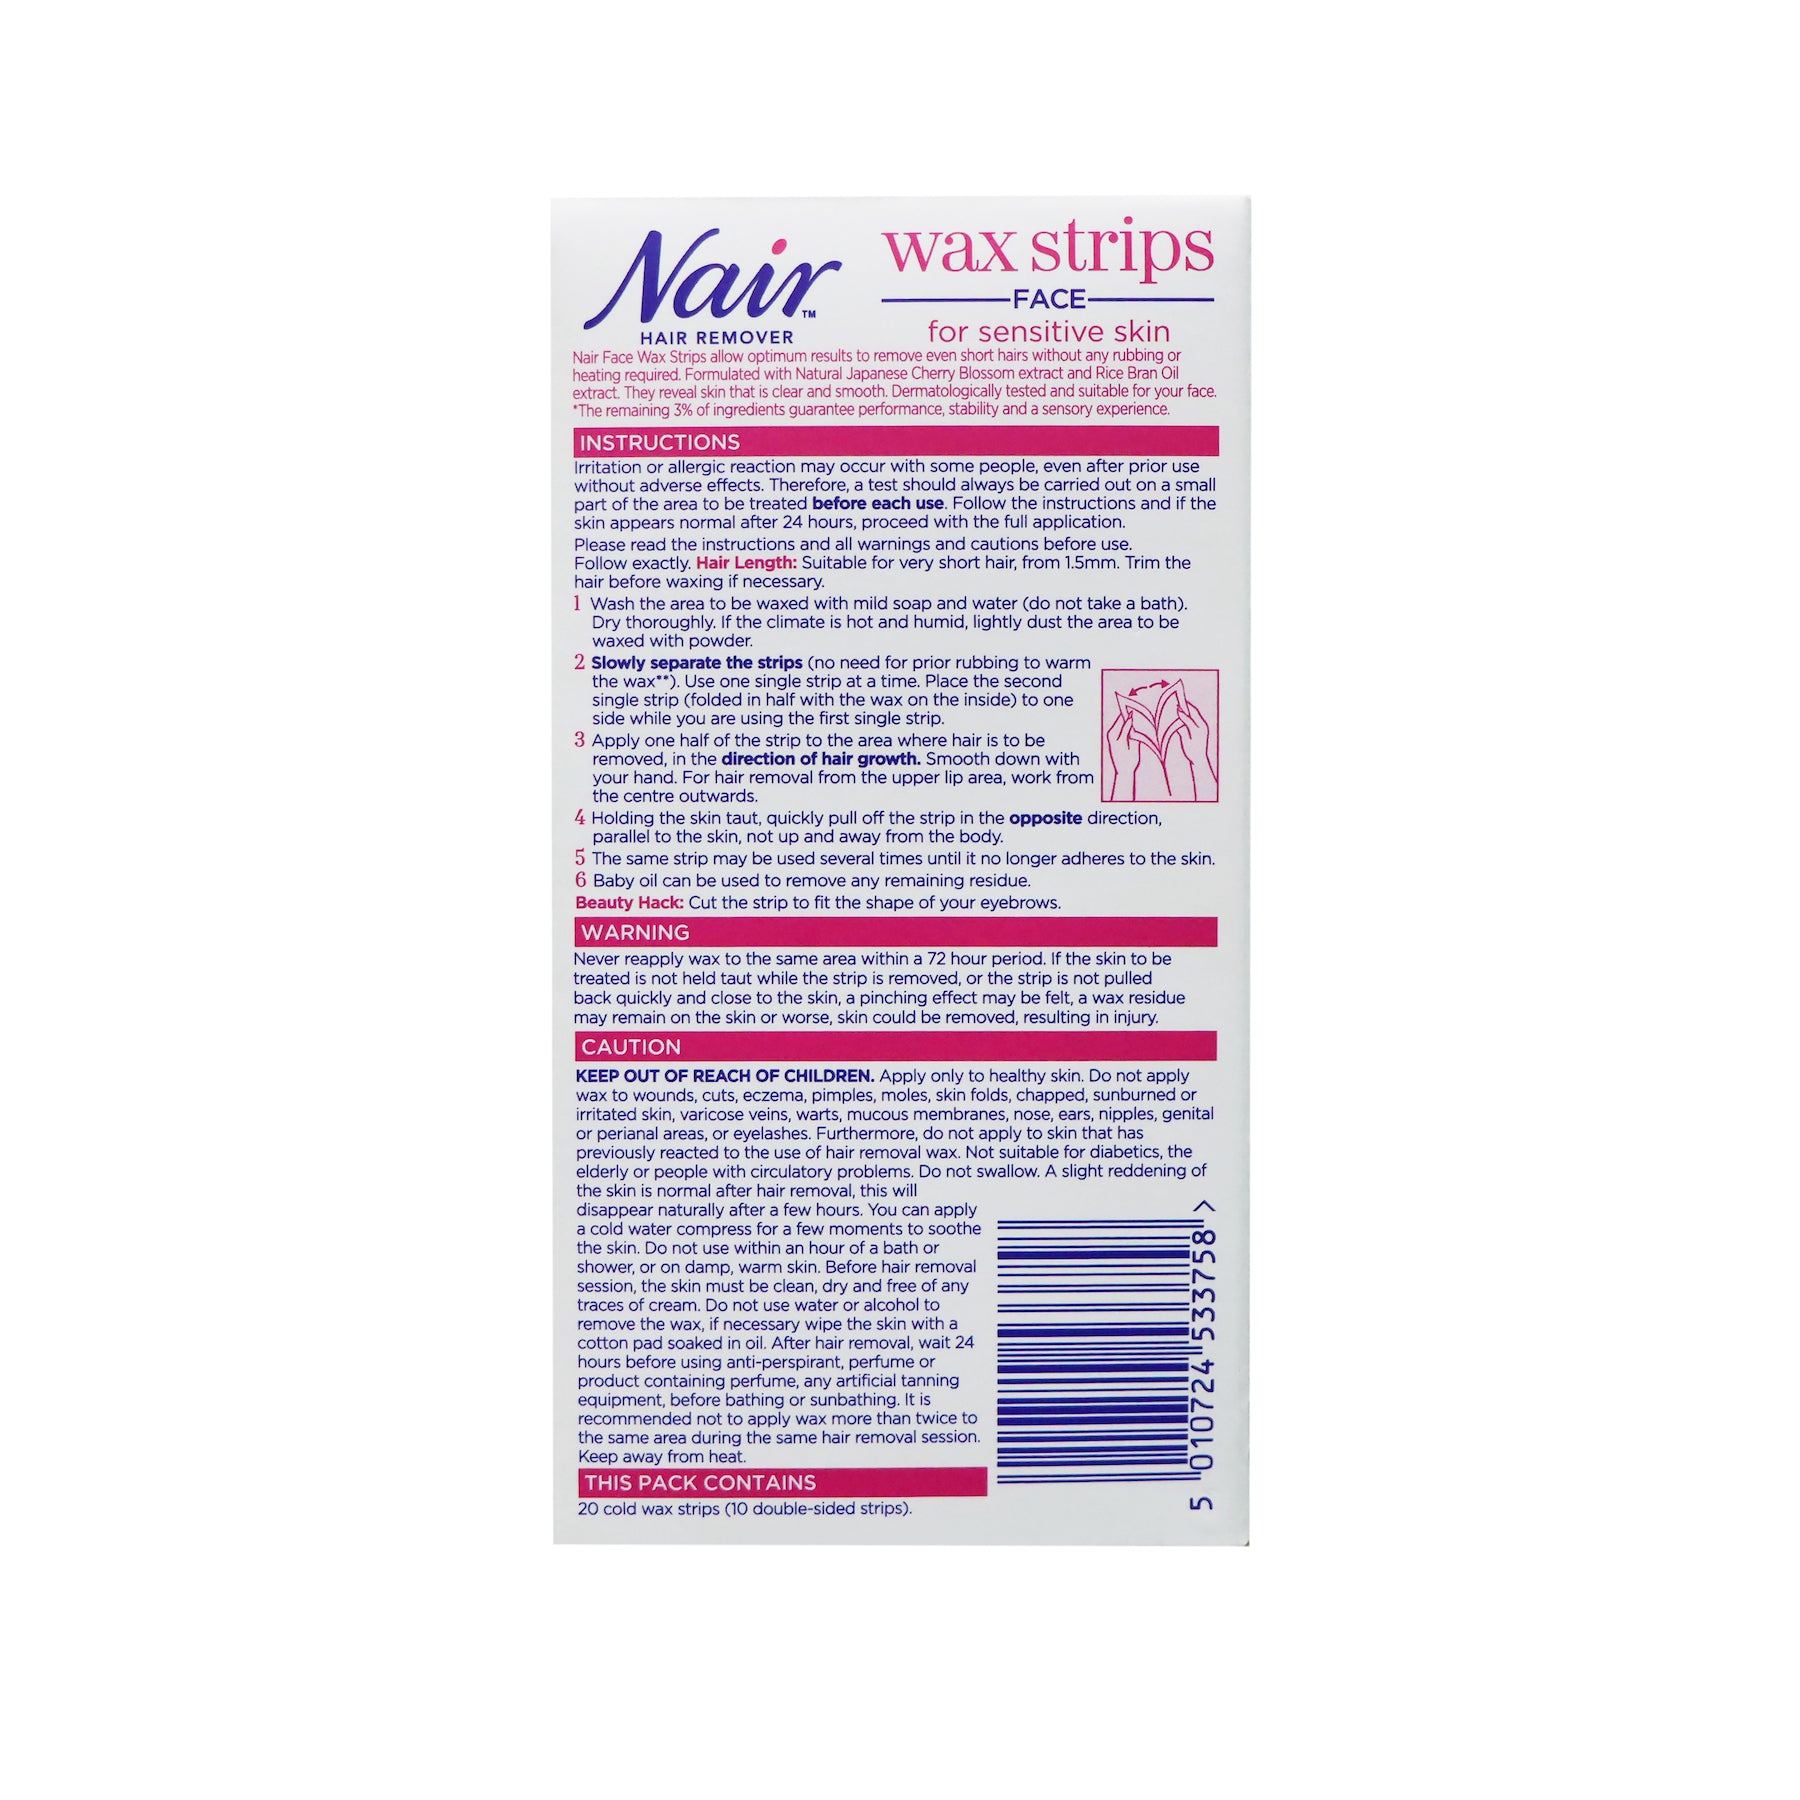 Nair Hair Remover Face Wax Strips 20pcs (For Sensitive Skin)